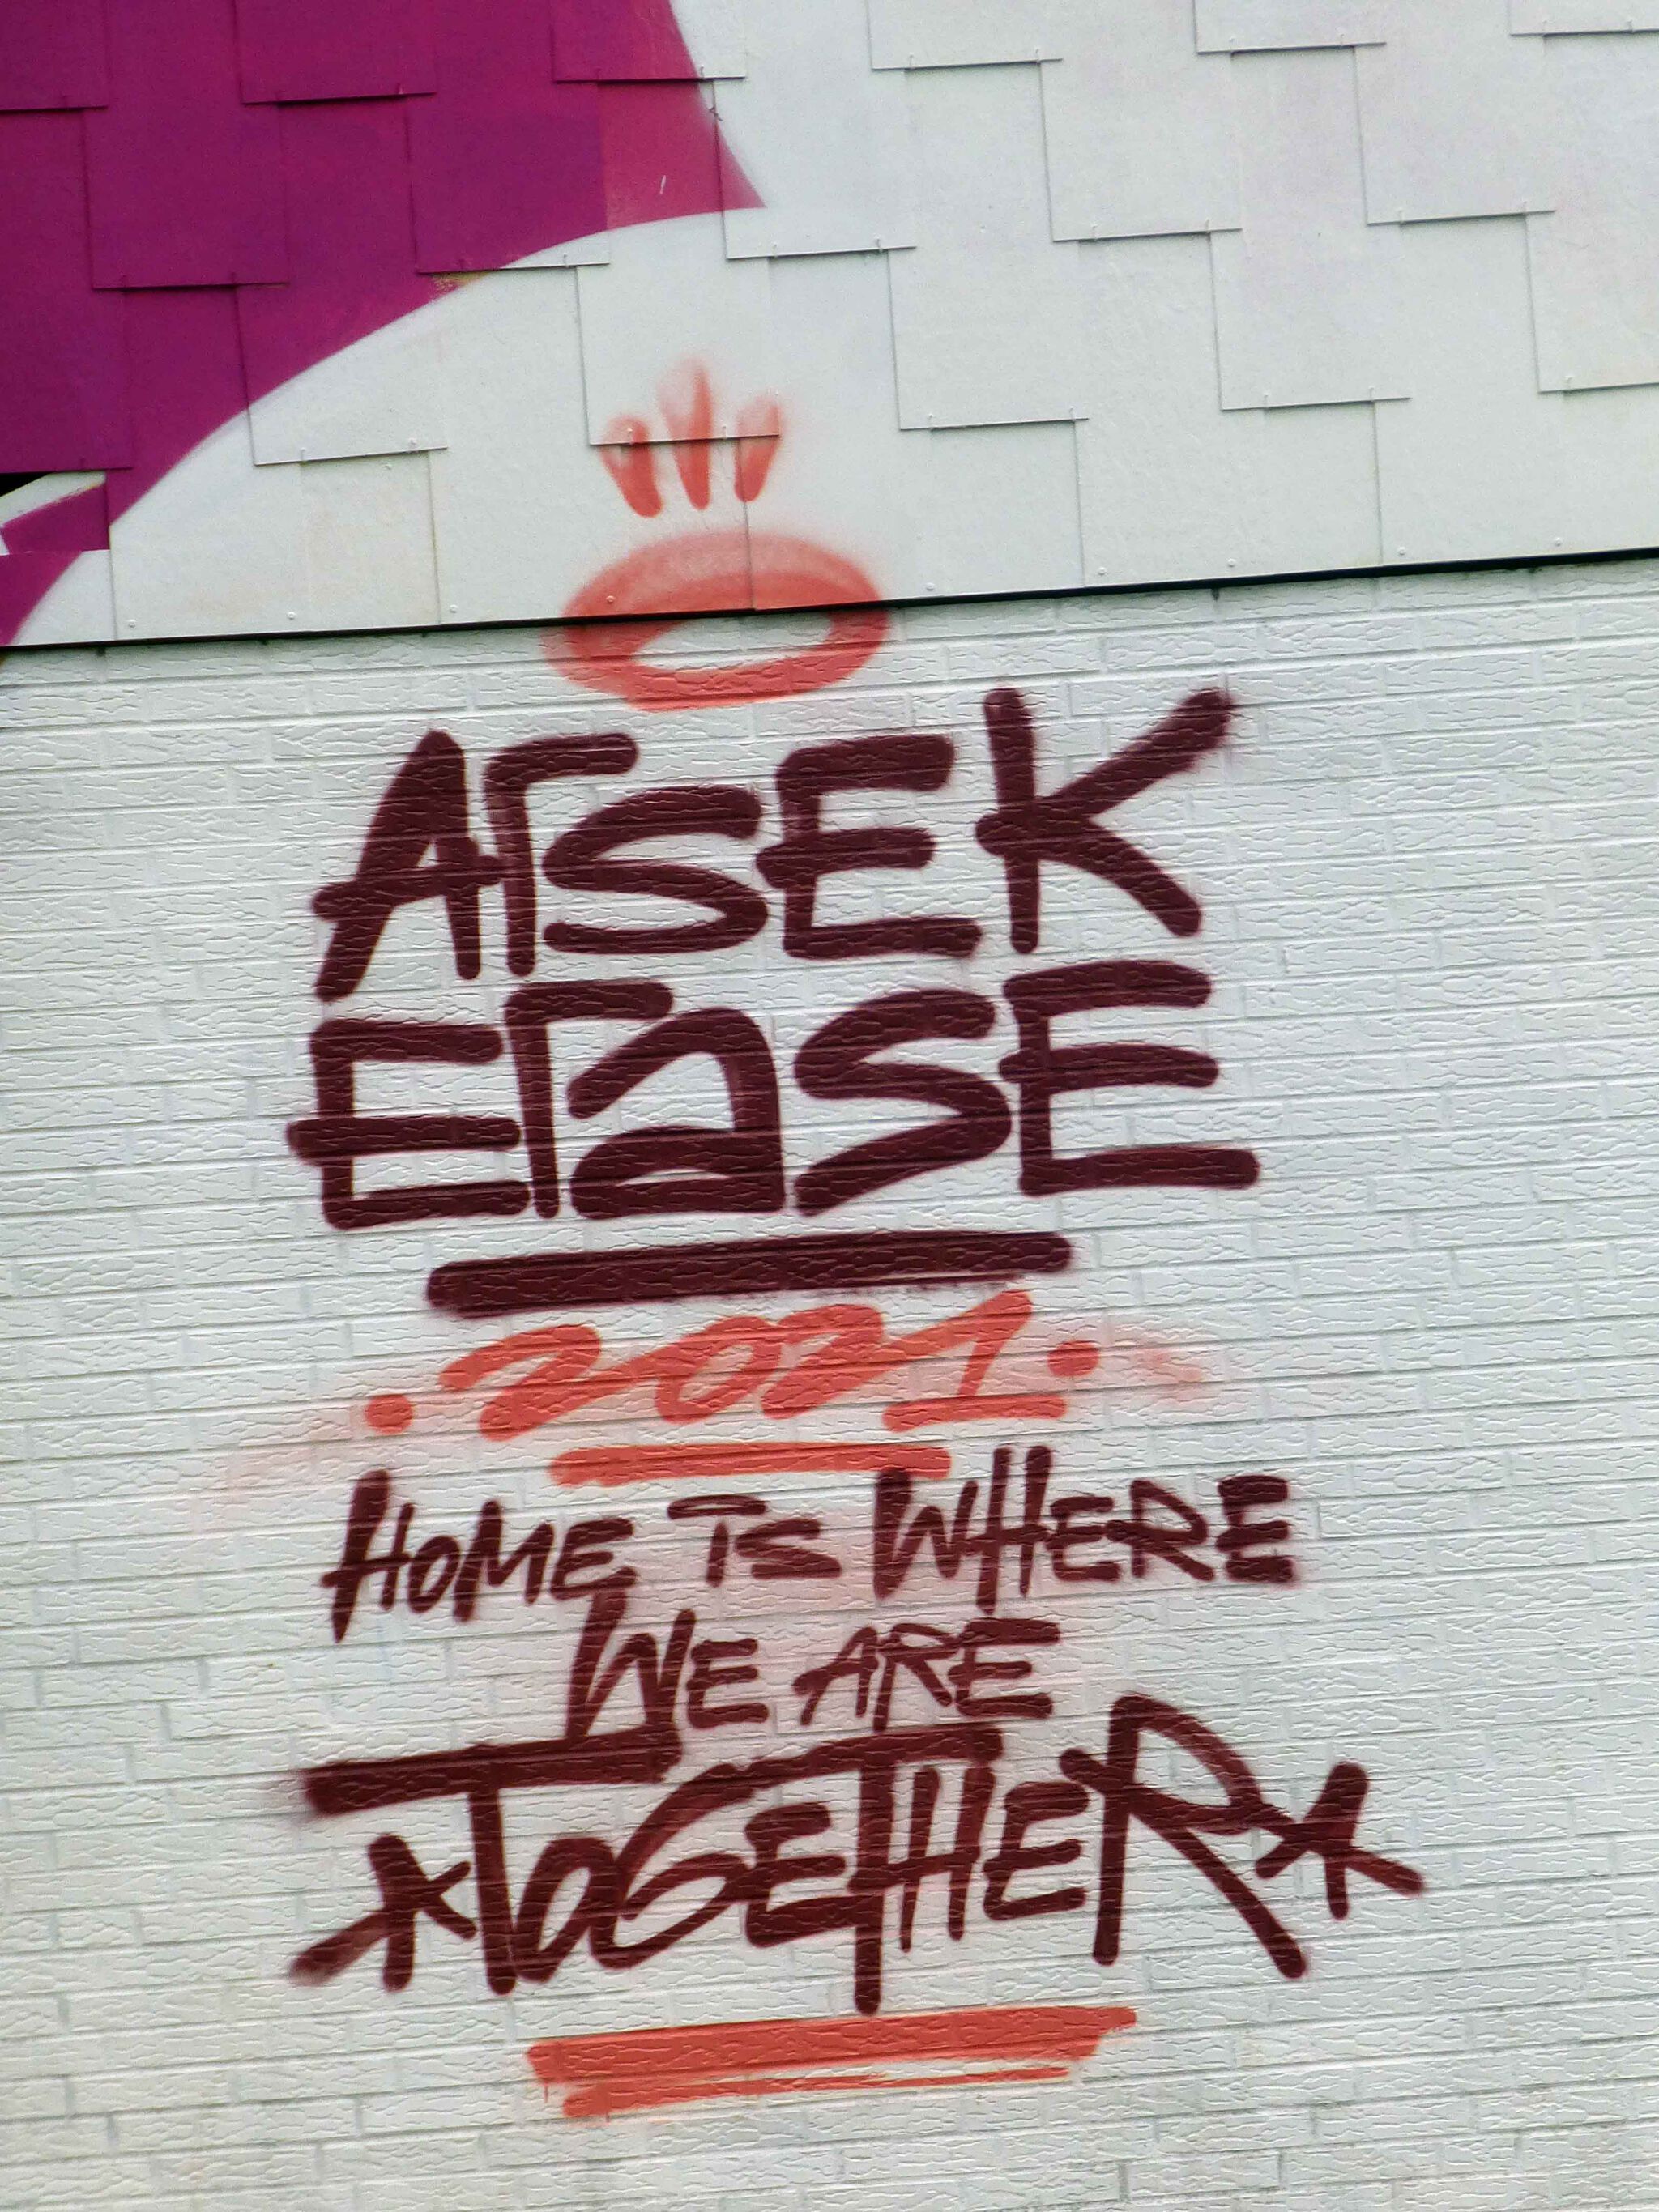 Arsek Erase&mdash;Home